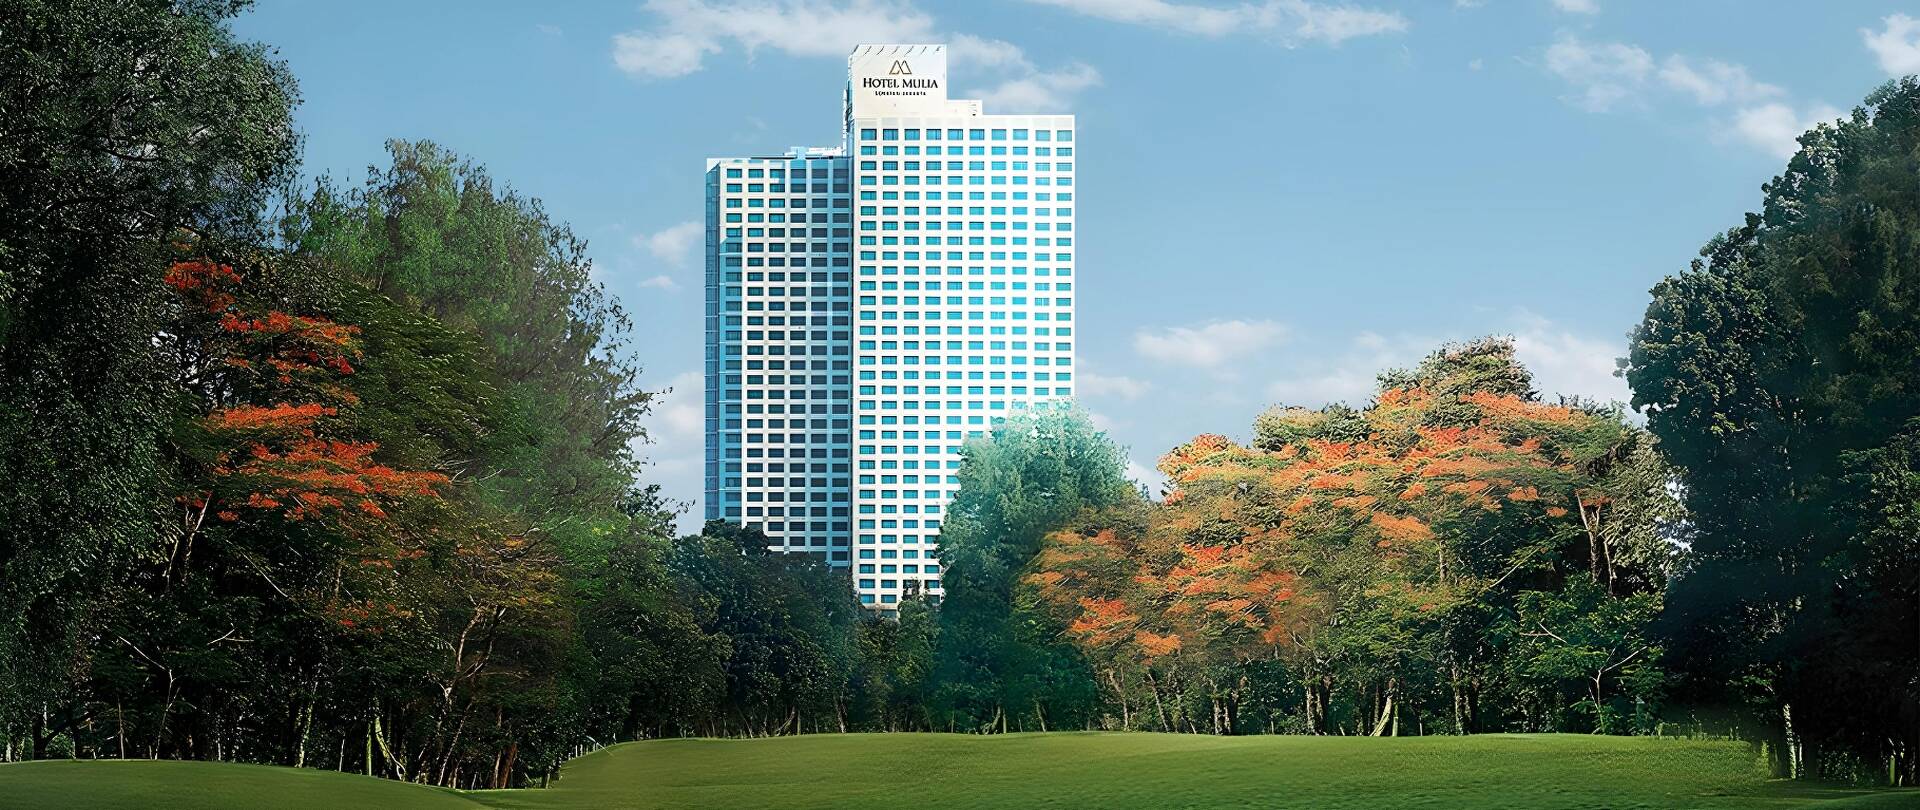 The More, The Merrier | Hotel Mulia Senayan, Jakarta